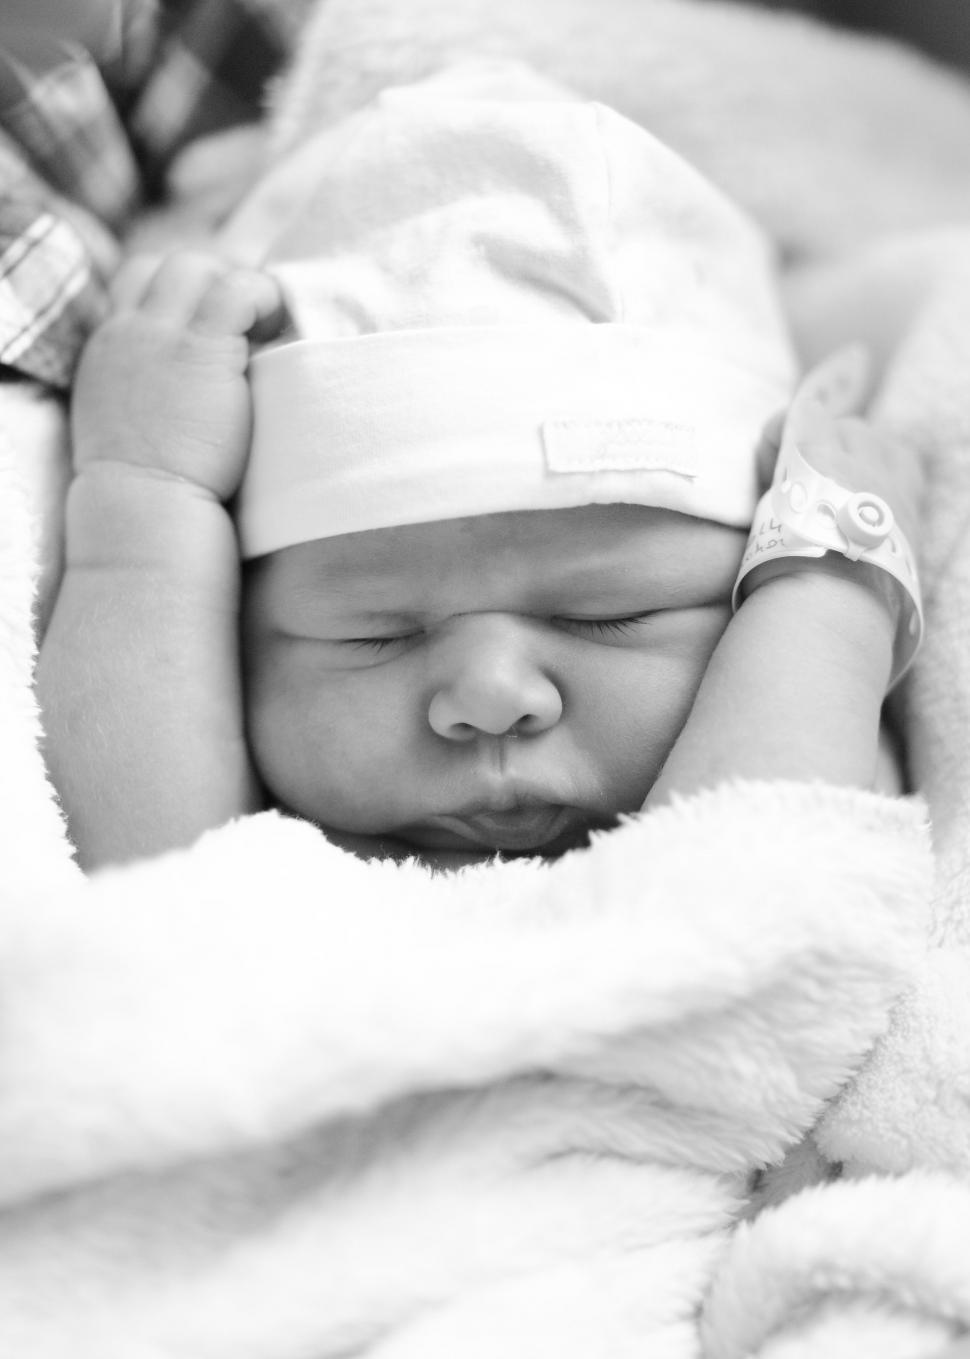 Free Image of Newborn Baby - Eyes Closed 